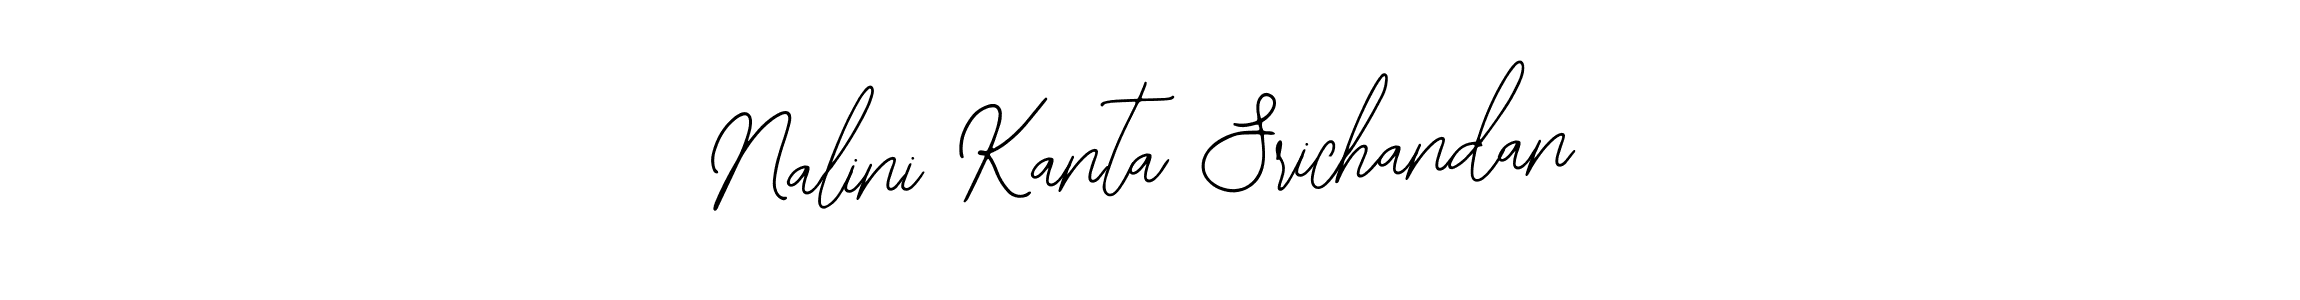 How to Draw Nalini Kanta Srichandan signature style? Bearetta-2O07w is a latest design signature styles for name Nalini Kanta Srichandan. Nalini Kanta Srichandan signature style 12 images and pictures png